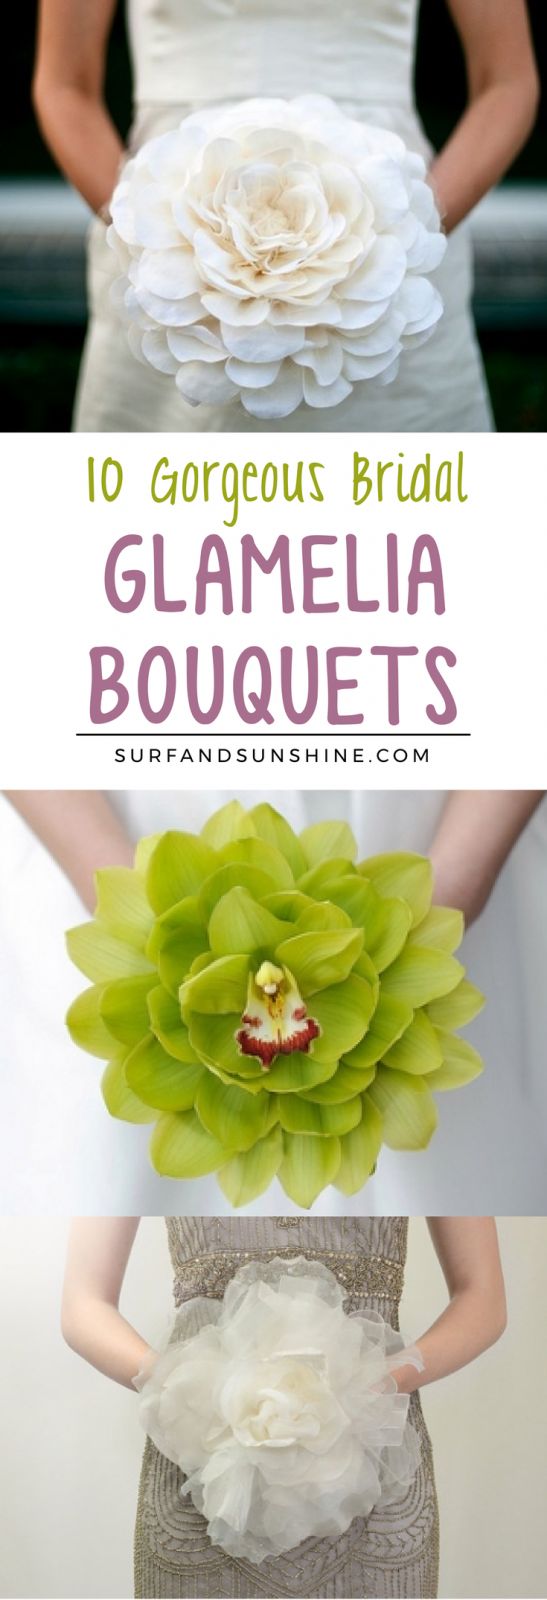 Wedding - 10 Gorgeous Glamelia Bridal Bouquets For Your Dream Wedding